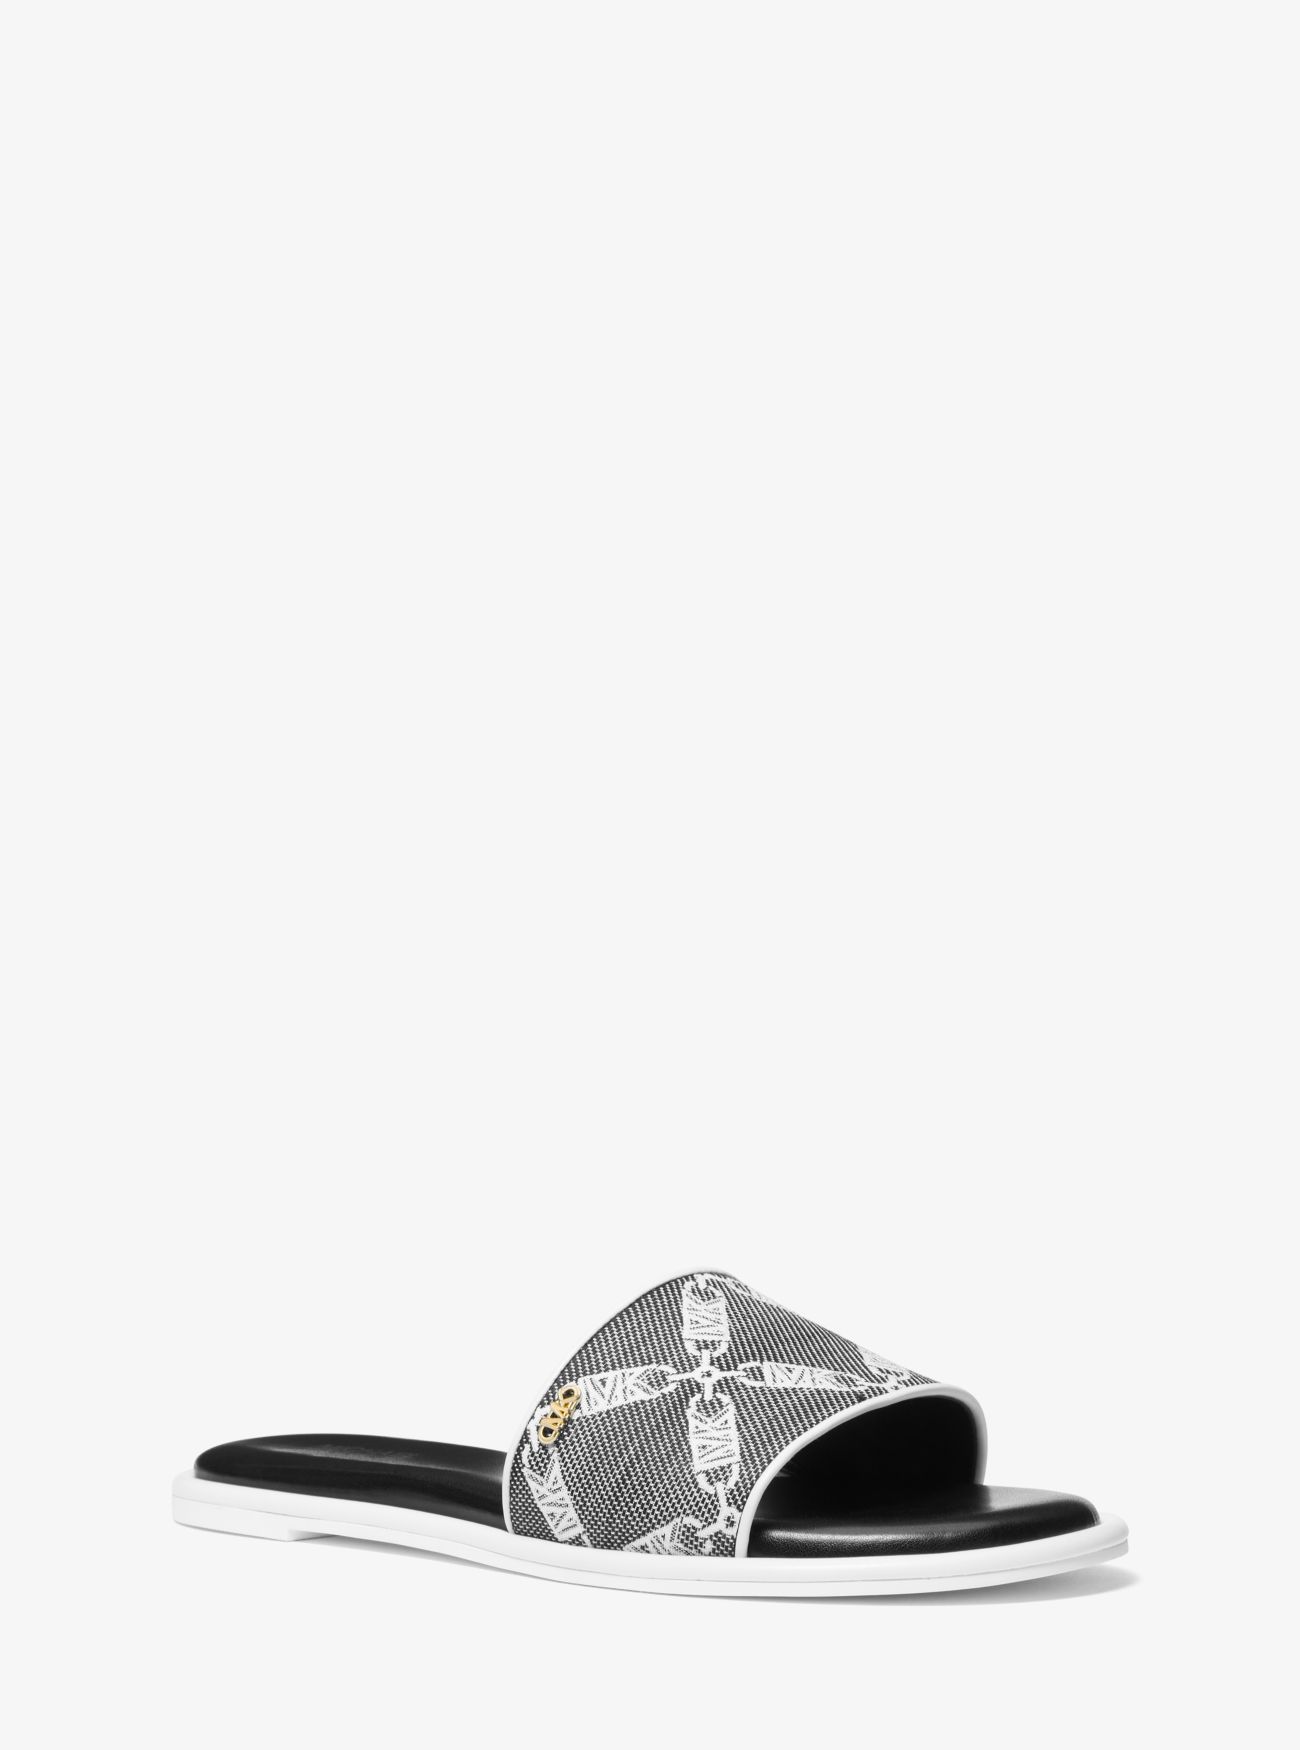 MK Saylor Empire Logo Jacquard Slide Sandal - Black - Michael Kors